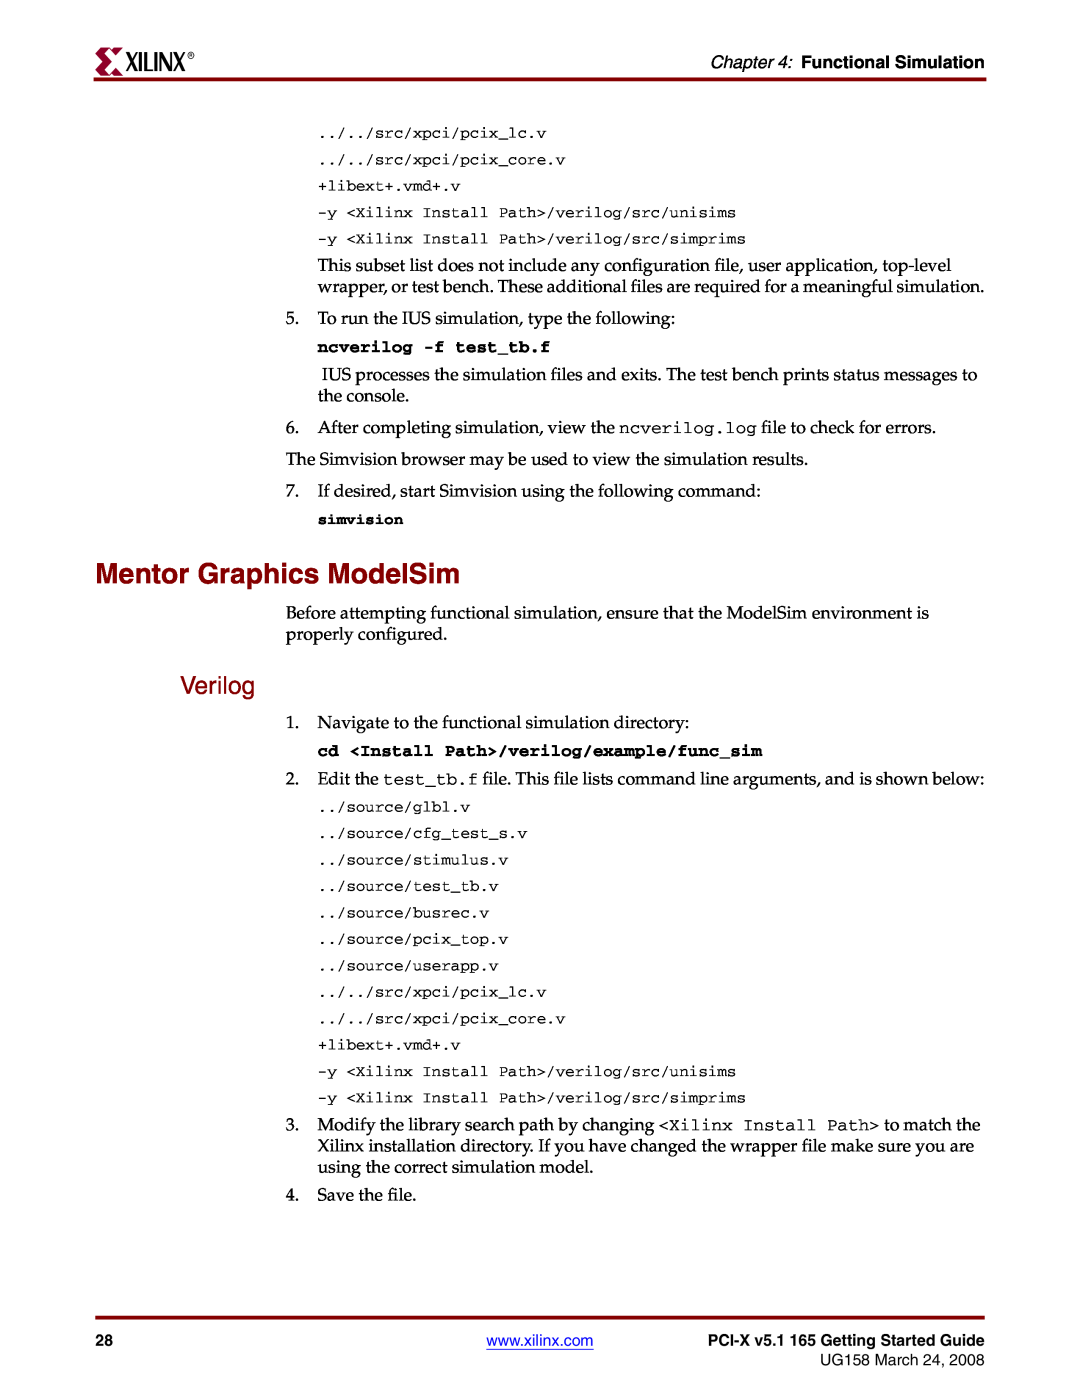 Xilinx PCI-X v5.1 manual Mentor Graphics ModelSim, Verilog, Functional Simulation 